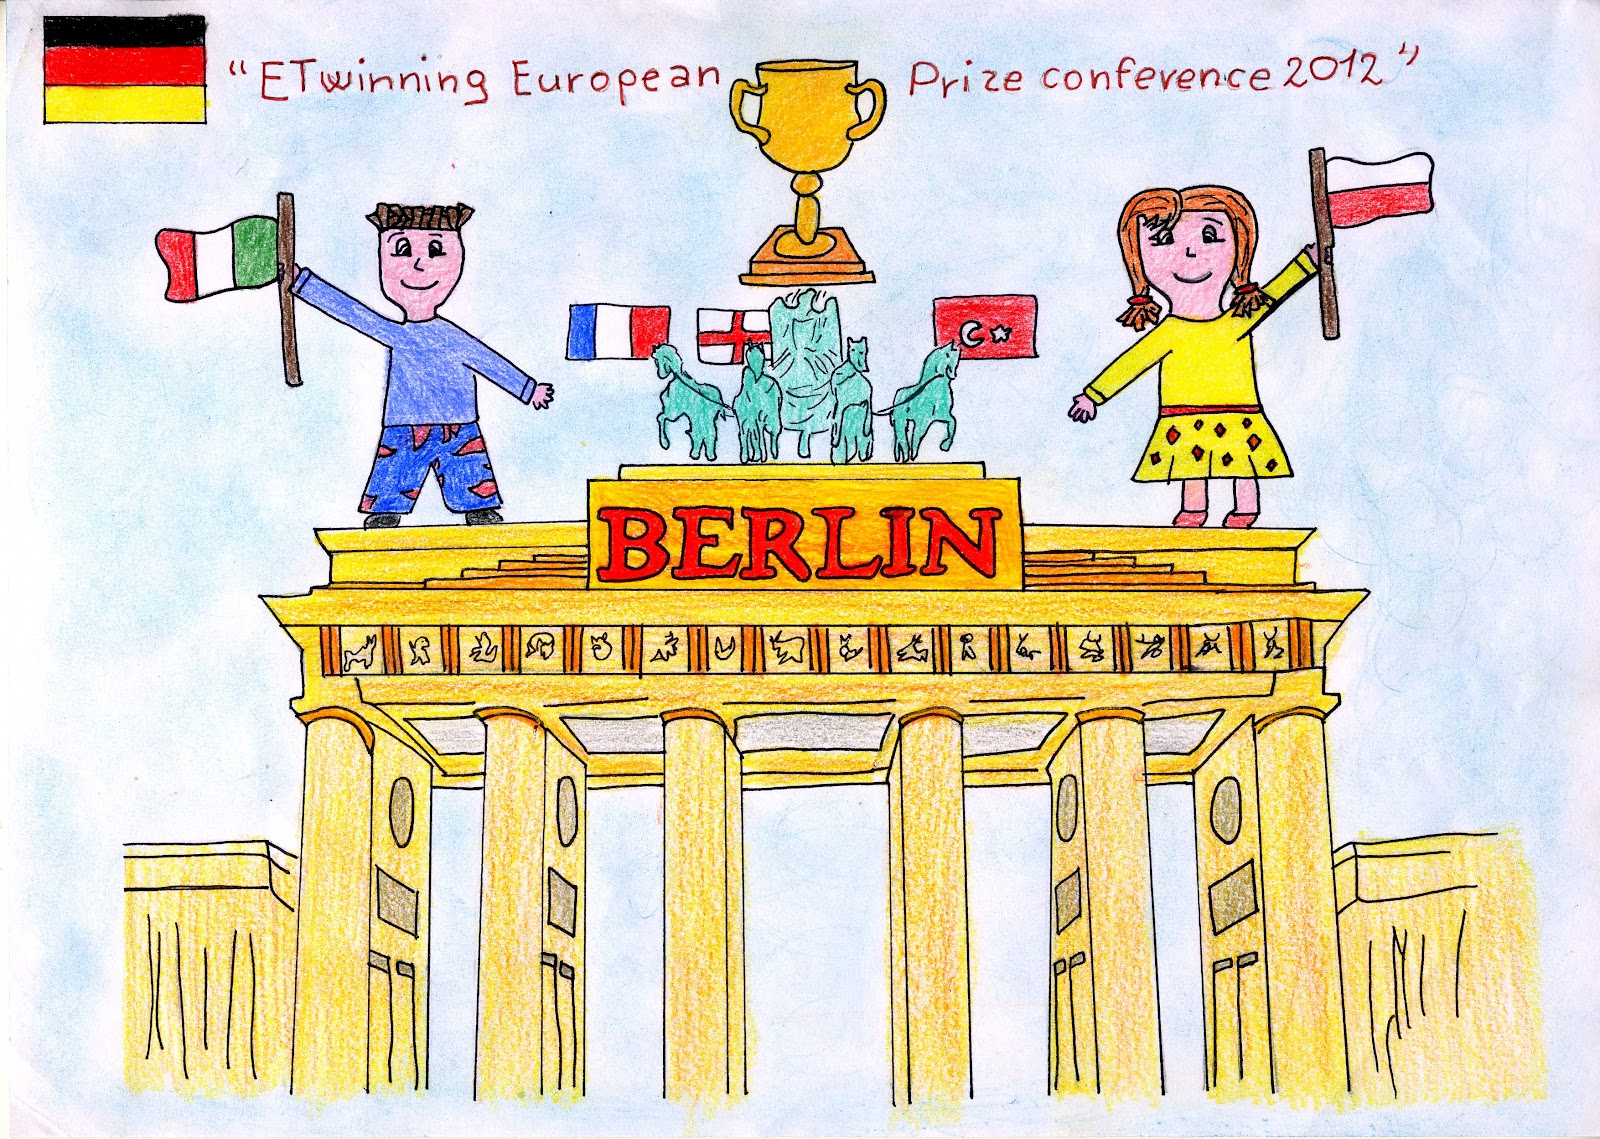 Etwinning Conference 2012